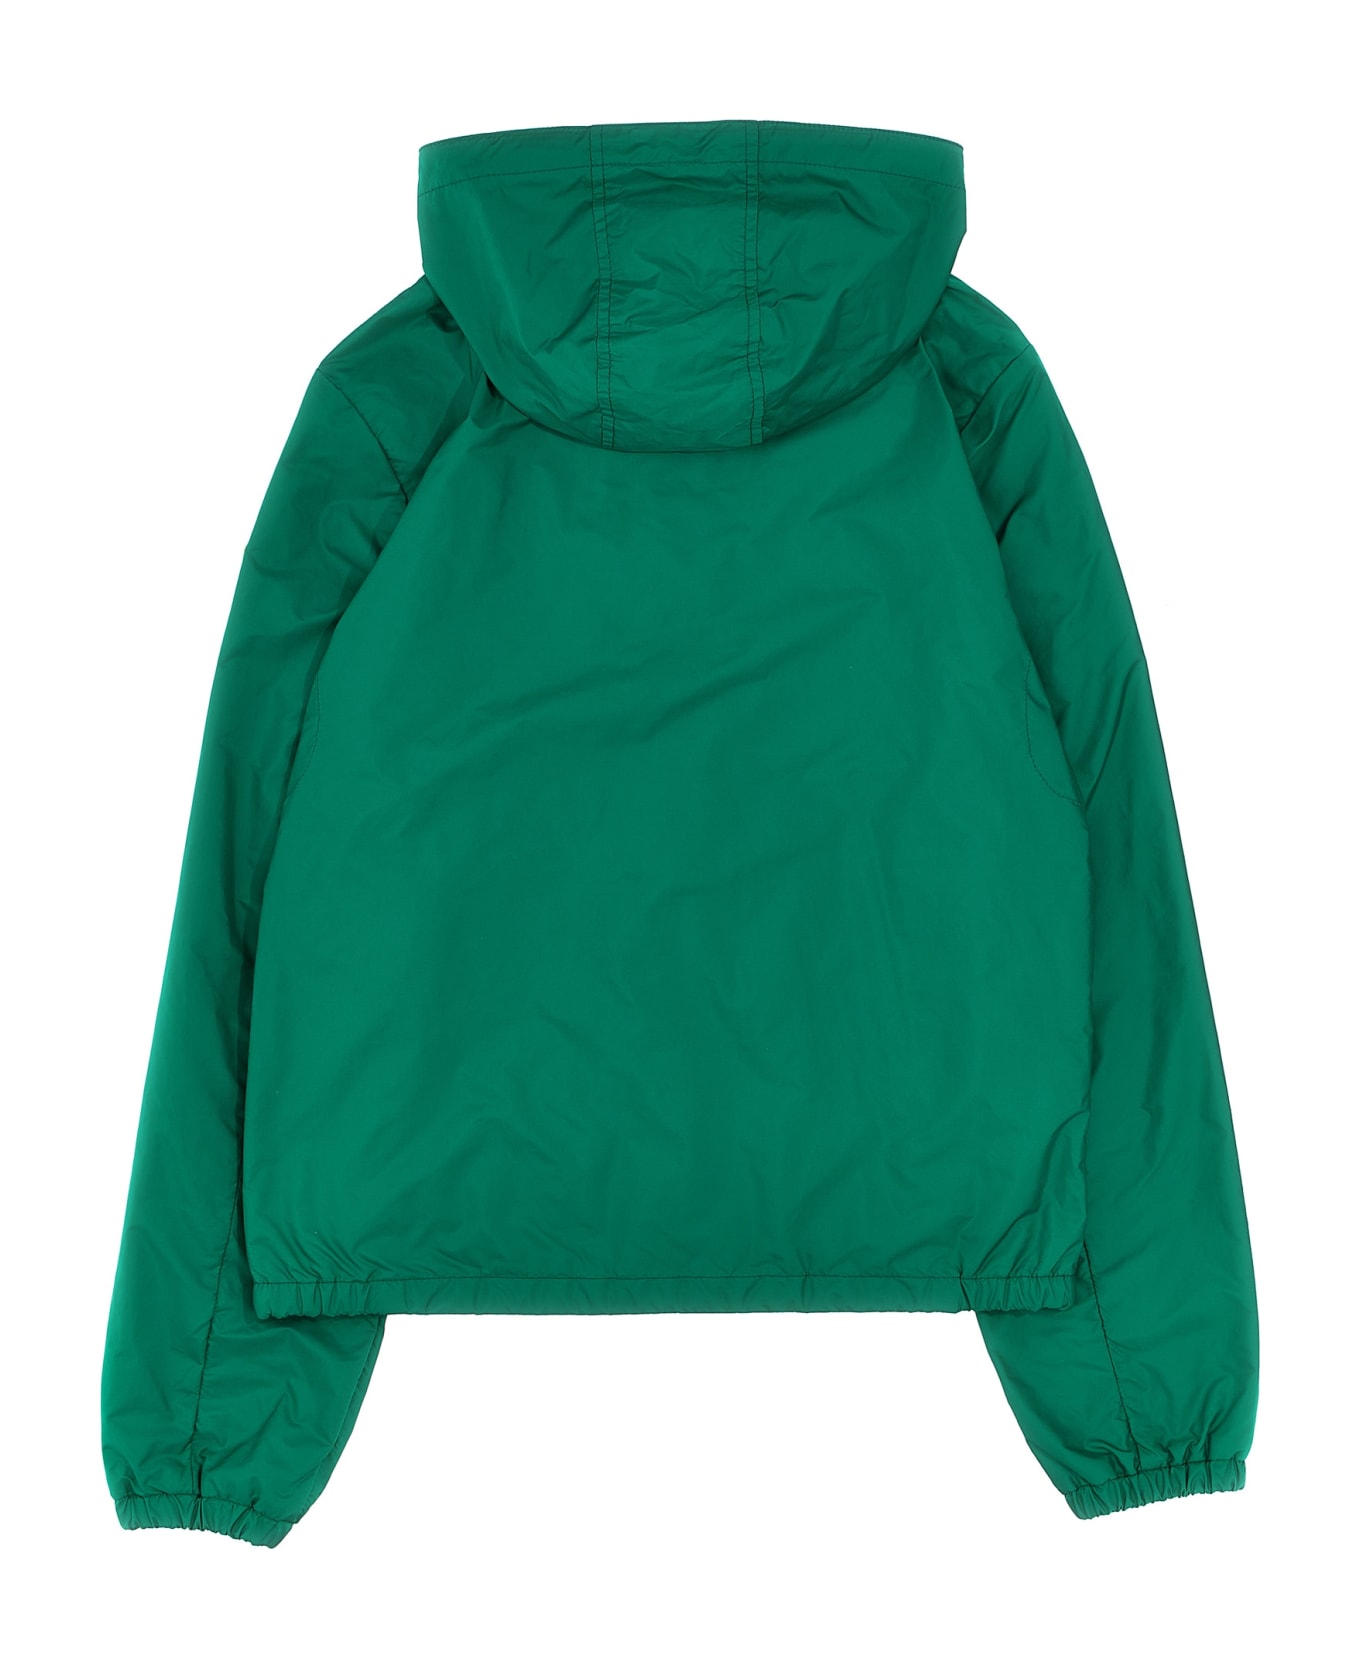 Moncler 'new Urville' Jacket - Green